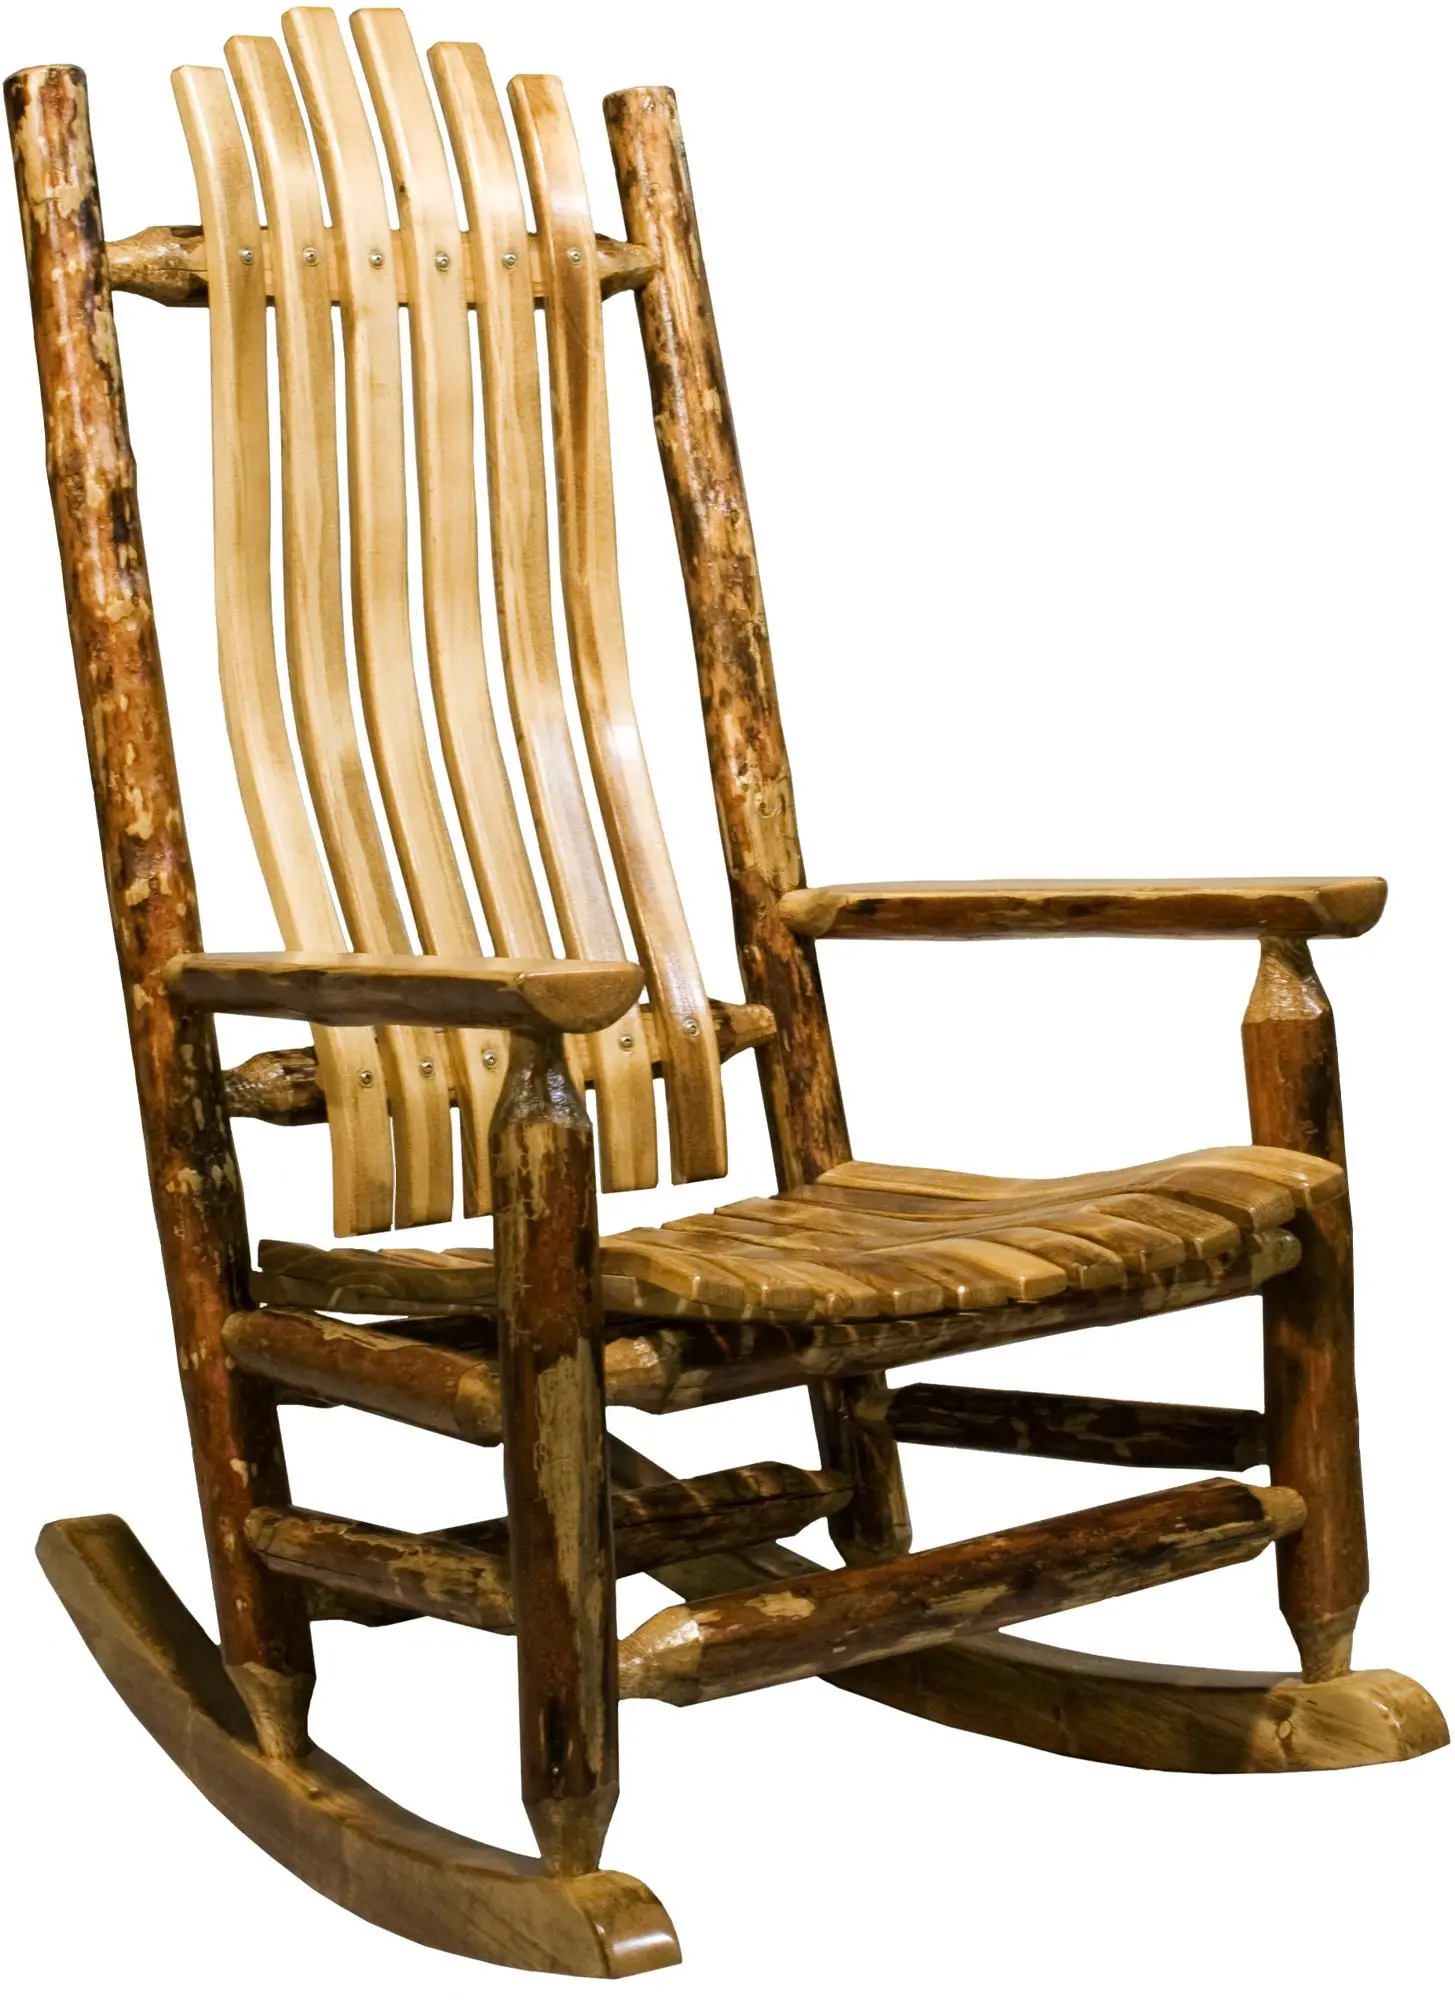 Glacier Country Log Rocking Chair